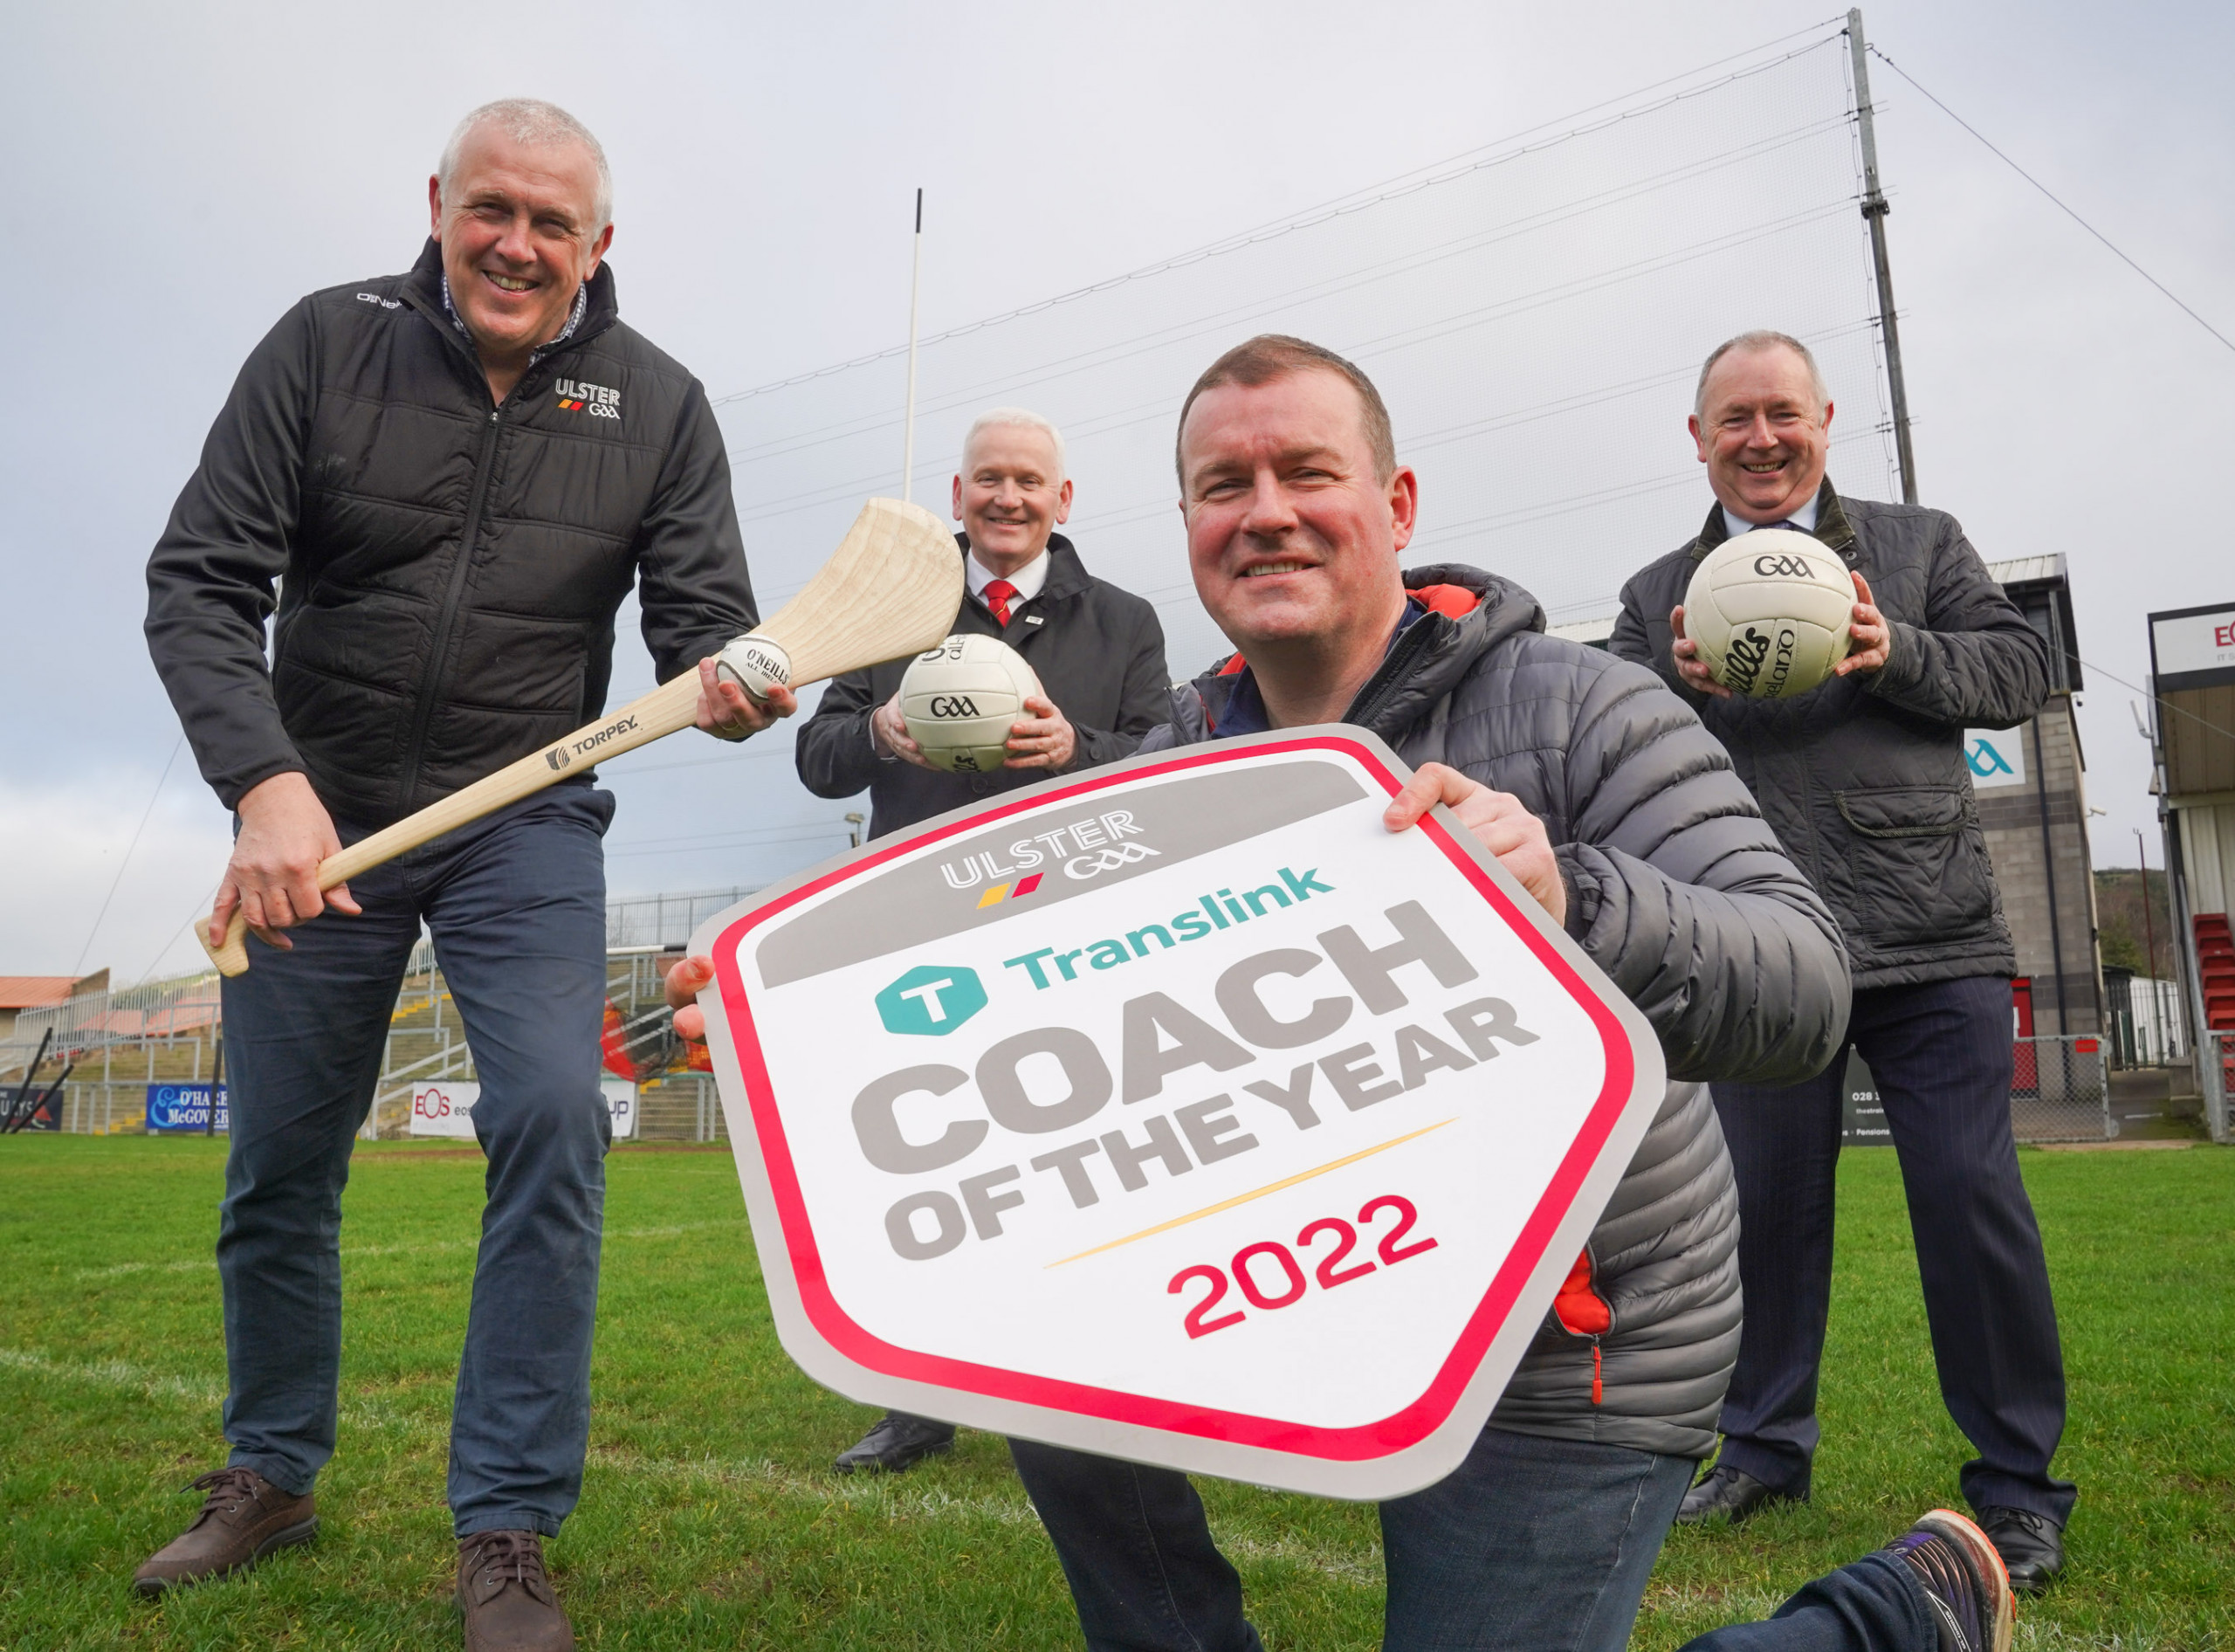 Translink Ulster GAA Coach of the Year Award now open